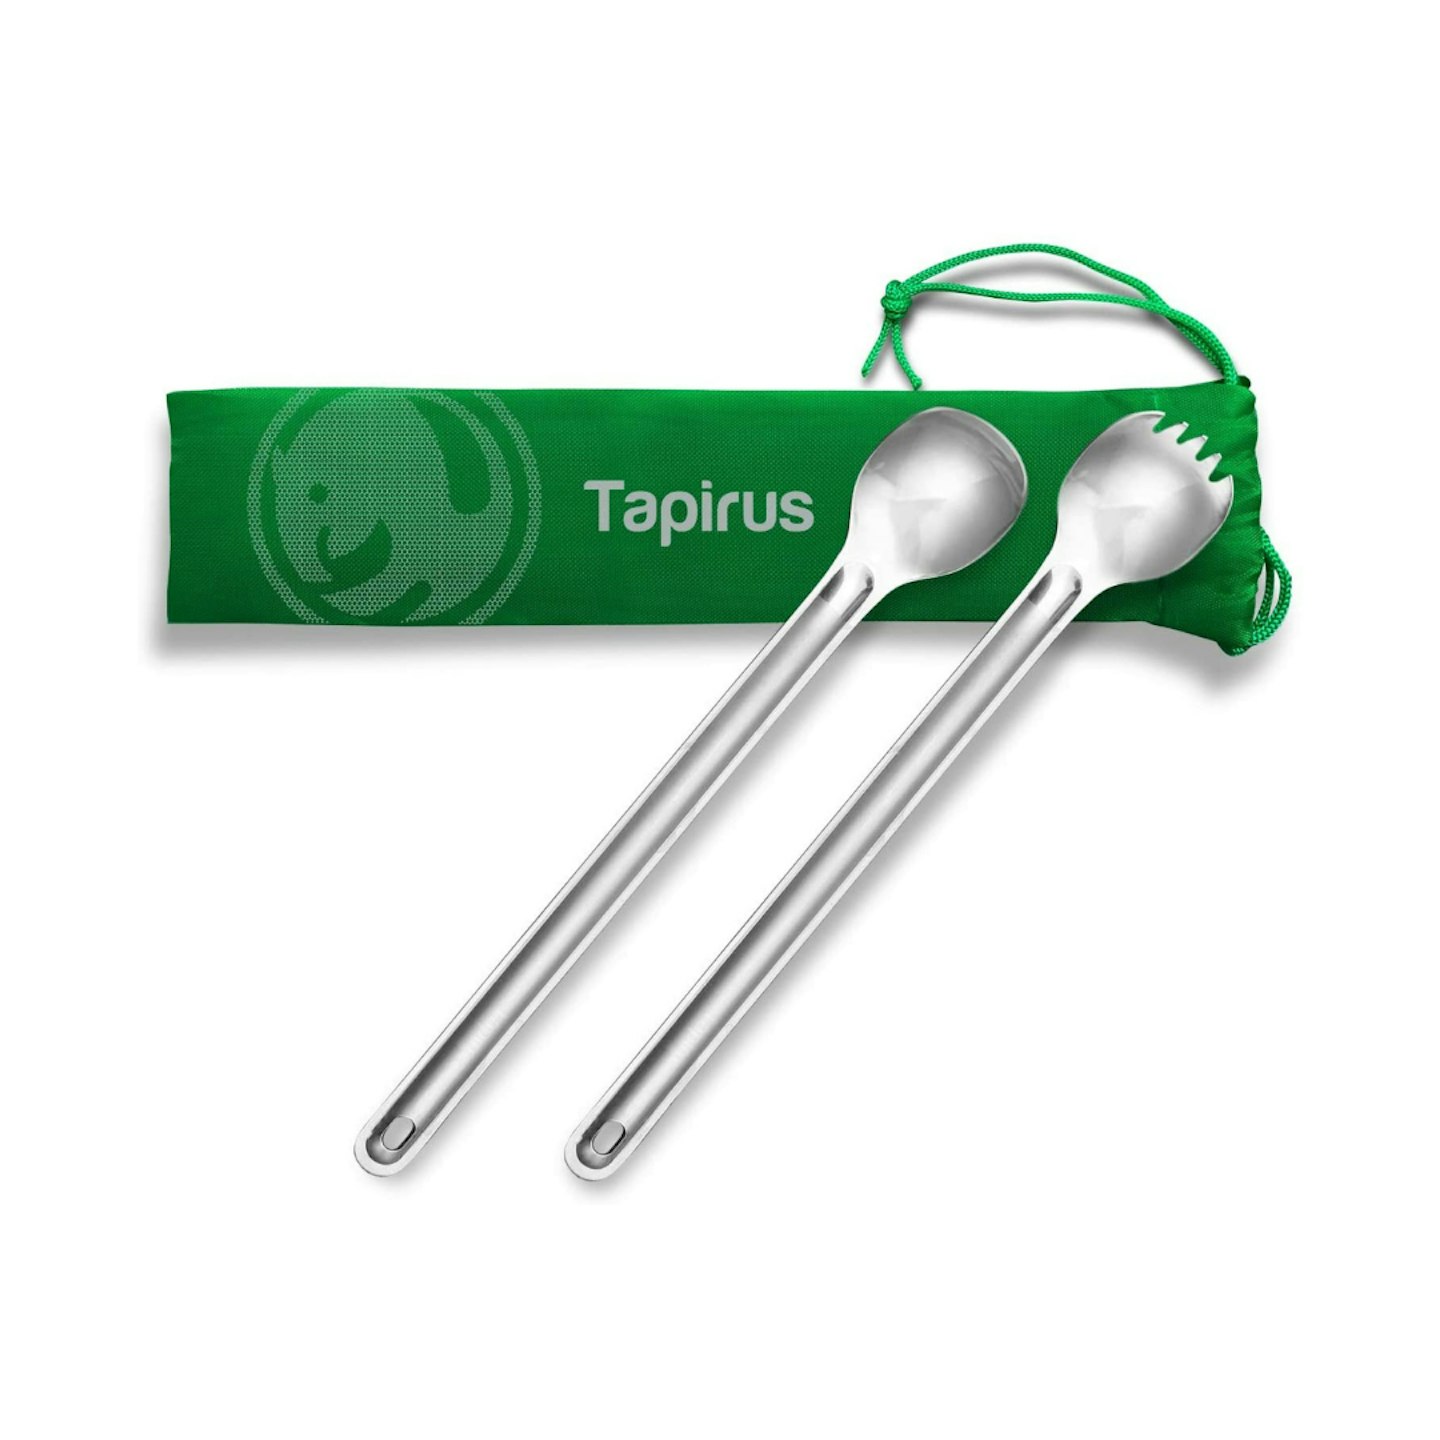 Tapirus Long Handle Spoon and Spork Set